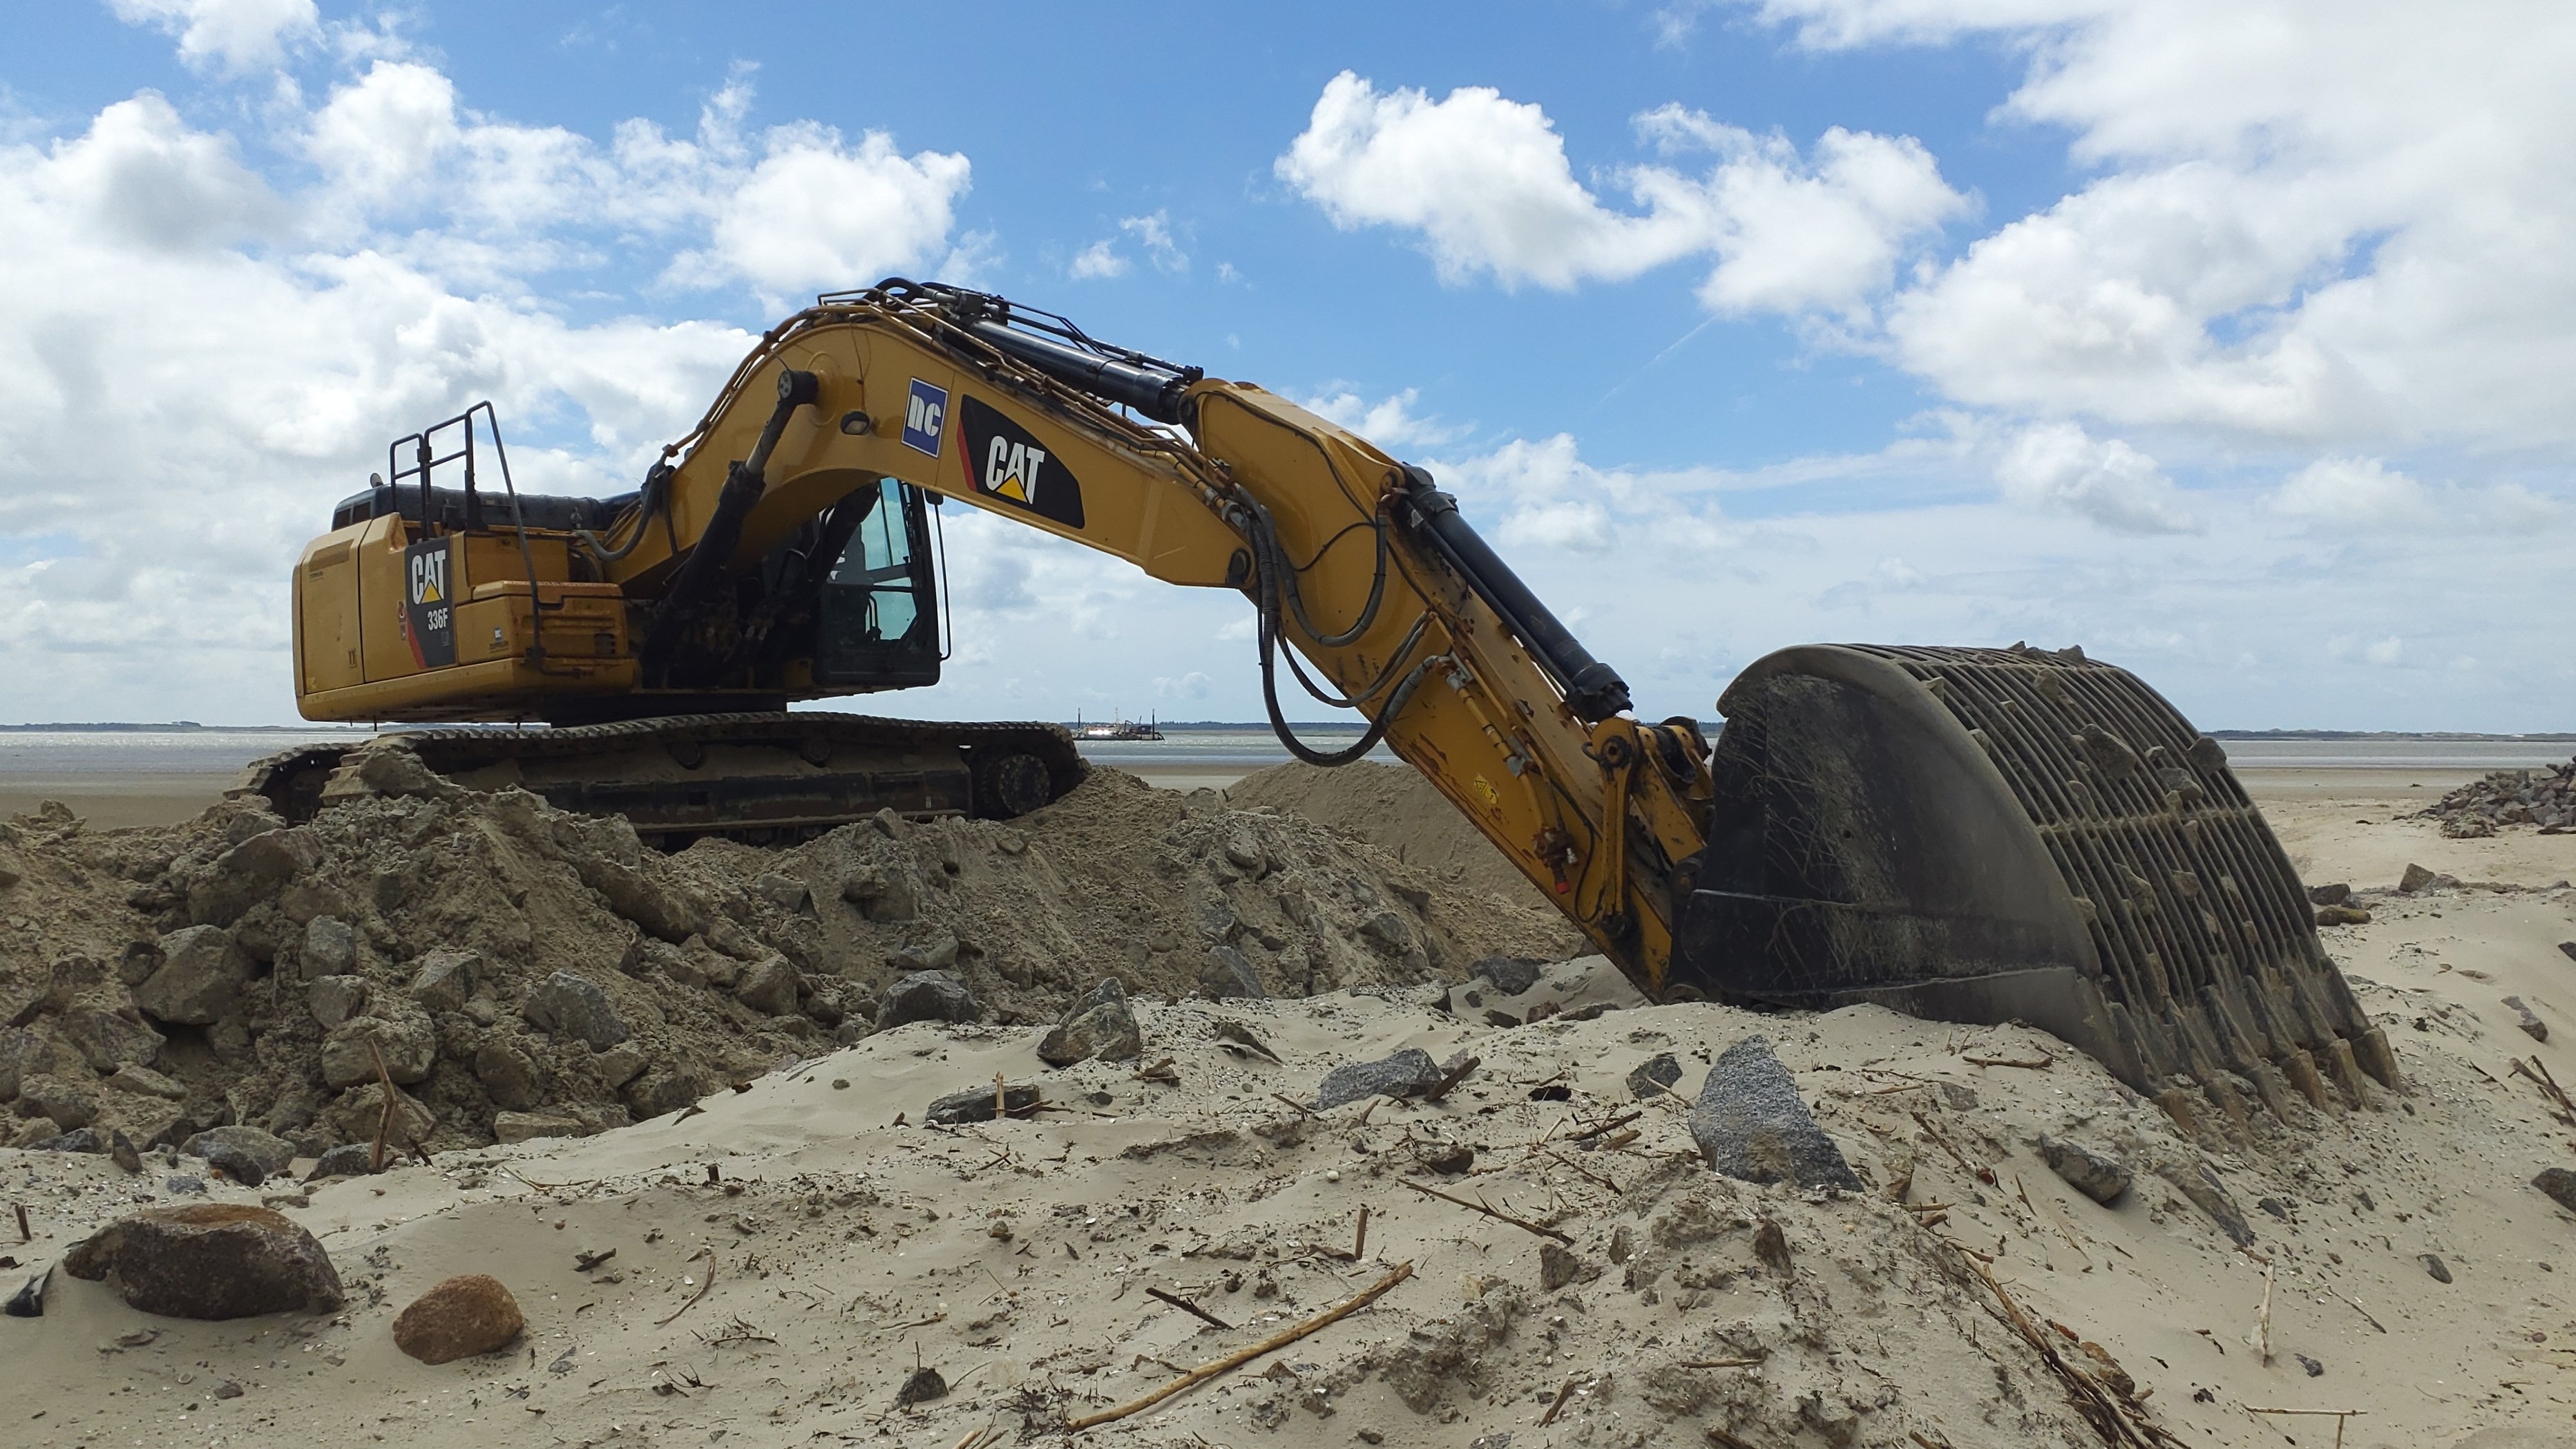 A shovel excavator on the beach.